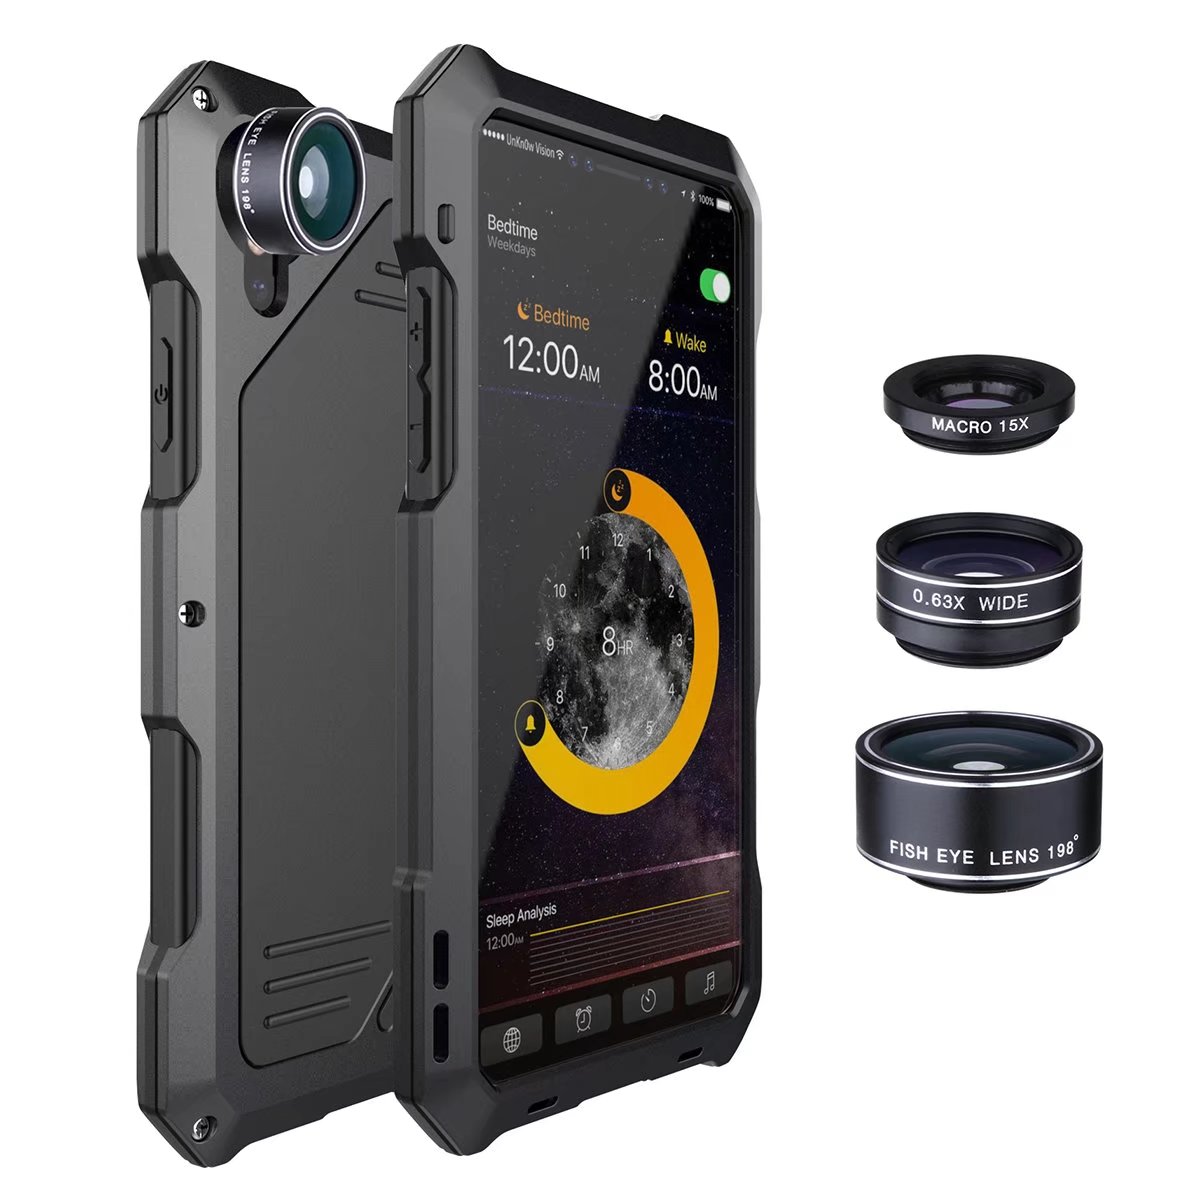 R-Just 3 in 1 Fisheye+Macro+Wide Angle Camera Lens IP54 Waterproof Dustproof Shockproof Silicone Aluminum Metal Heavy Duty Case Cover for Apple iPhone X